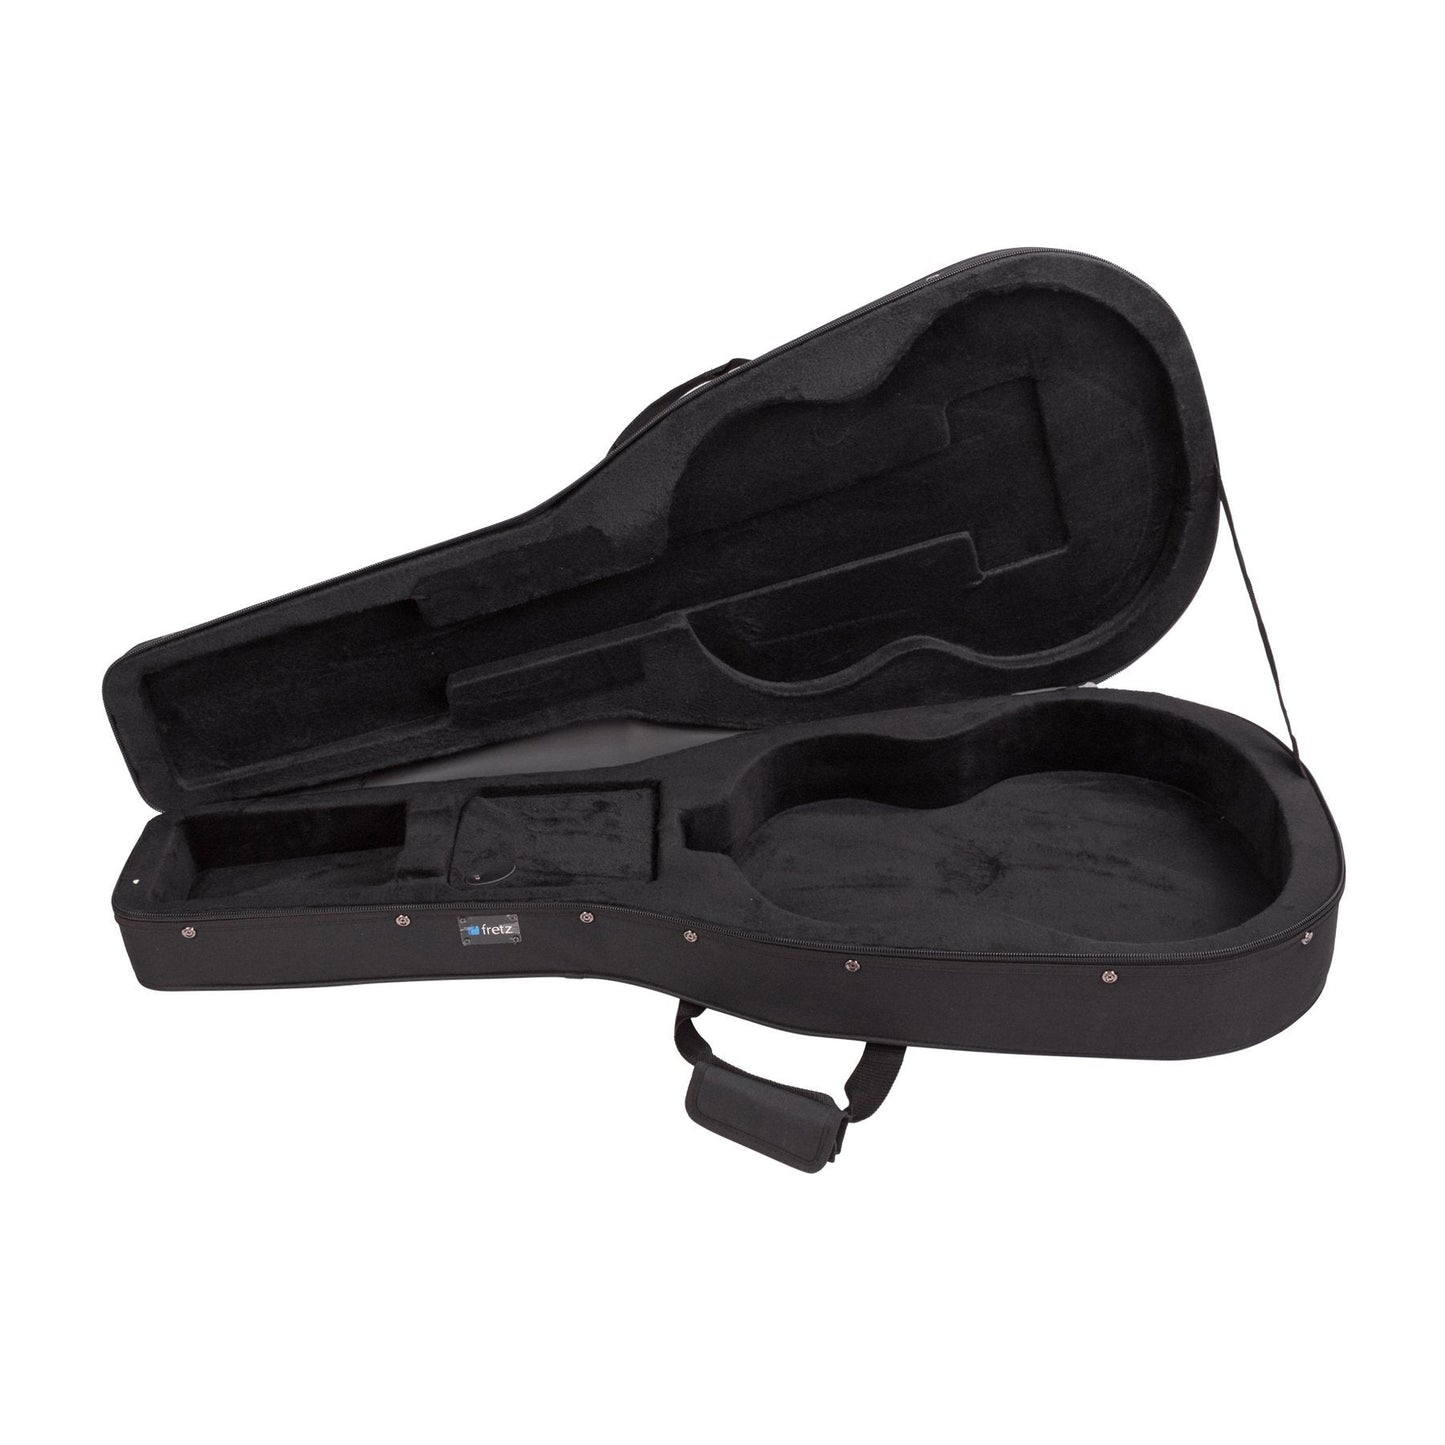 Fretz Shaped Classical Guitar Polyfoam Case (Black)